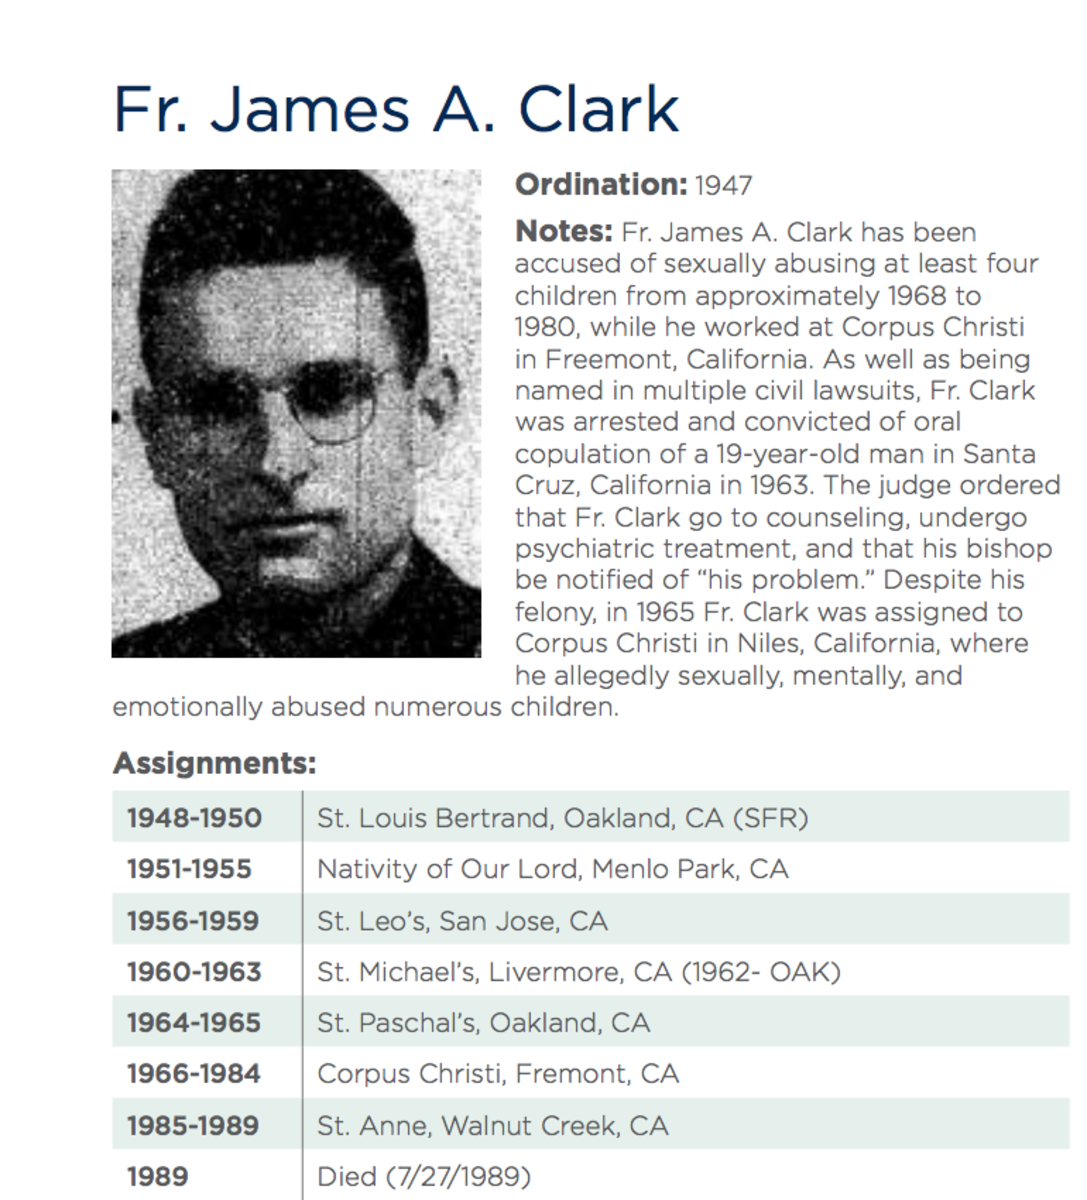 James Clark's entry in Anderson & Associates' report.